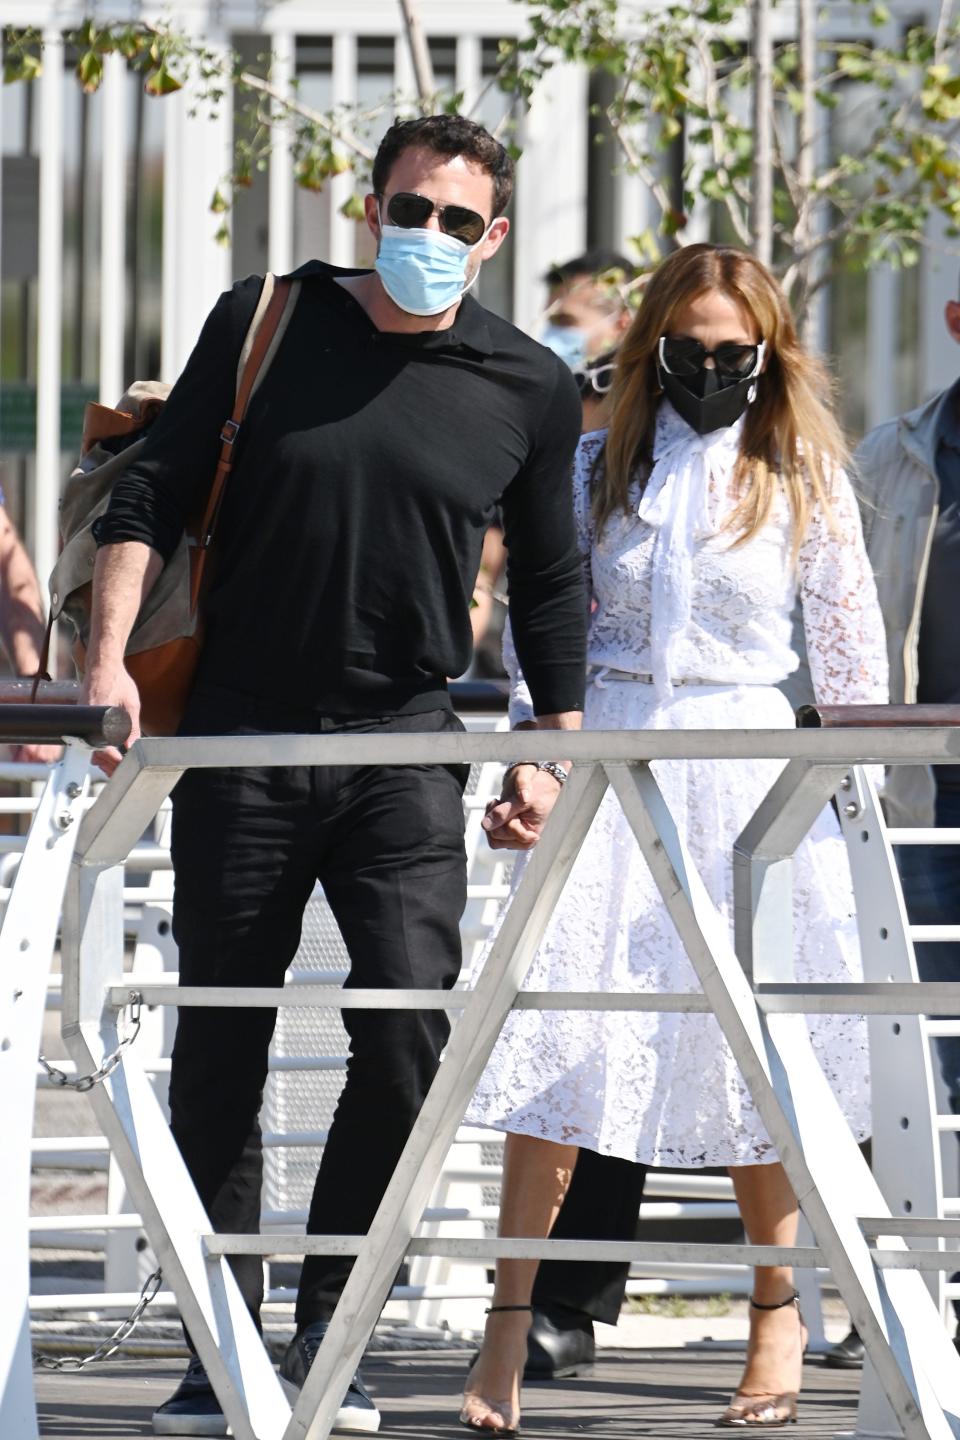 Ben Affleck and Jennifer Lopez arrive at the 78th Venice International Film Festival on Sept. 09, 2021, in Venice, Italy.